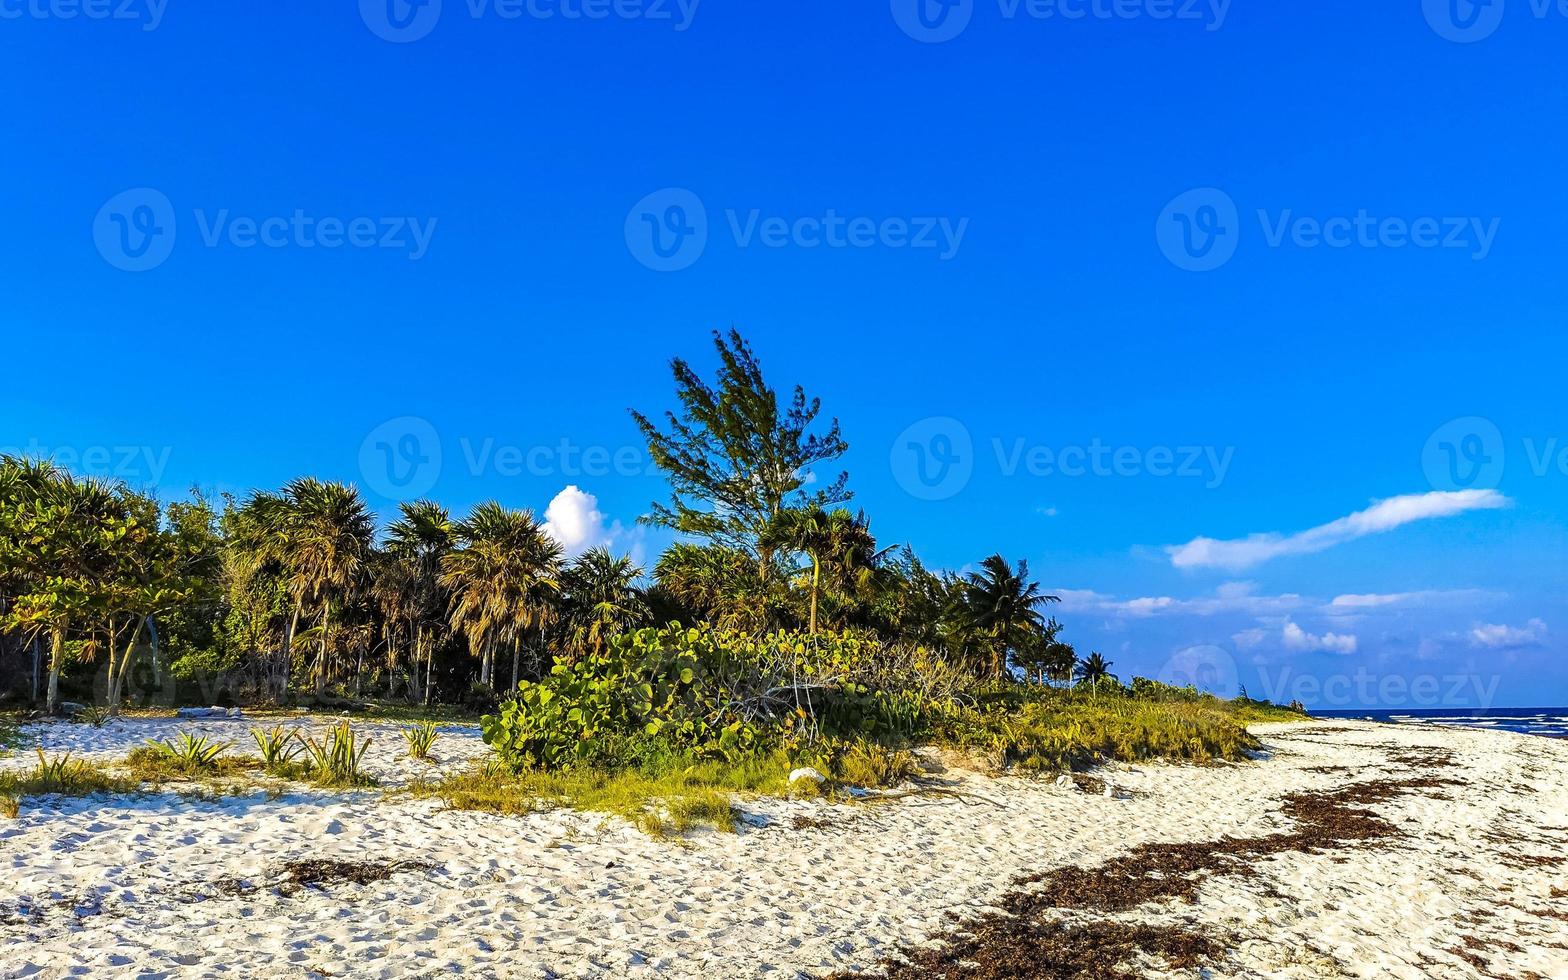 eau de plage des caraïbes tropicales algues sargazo playa del carmen mexique. photo